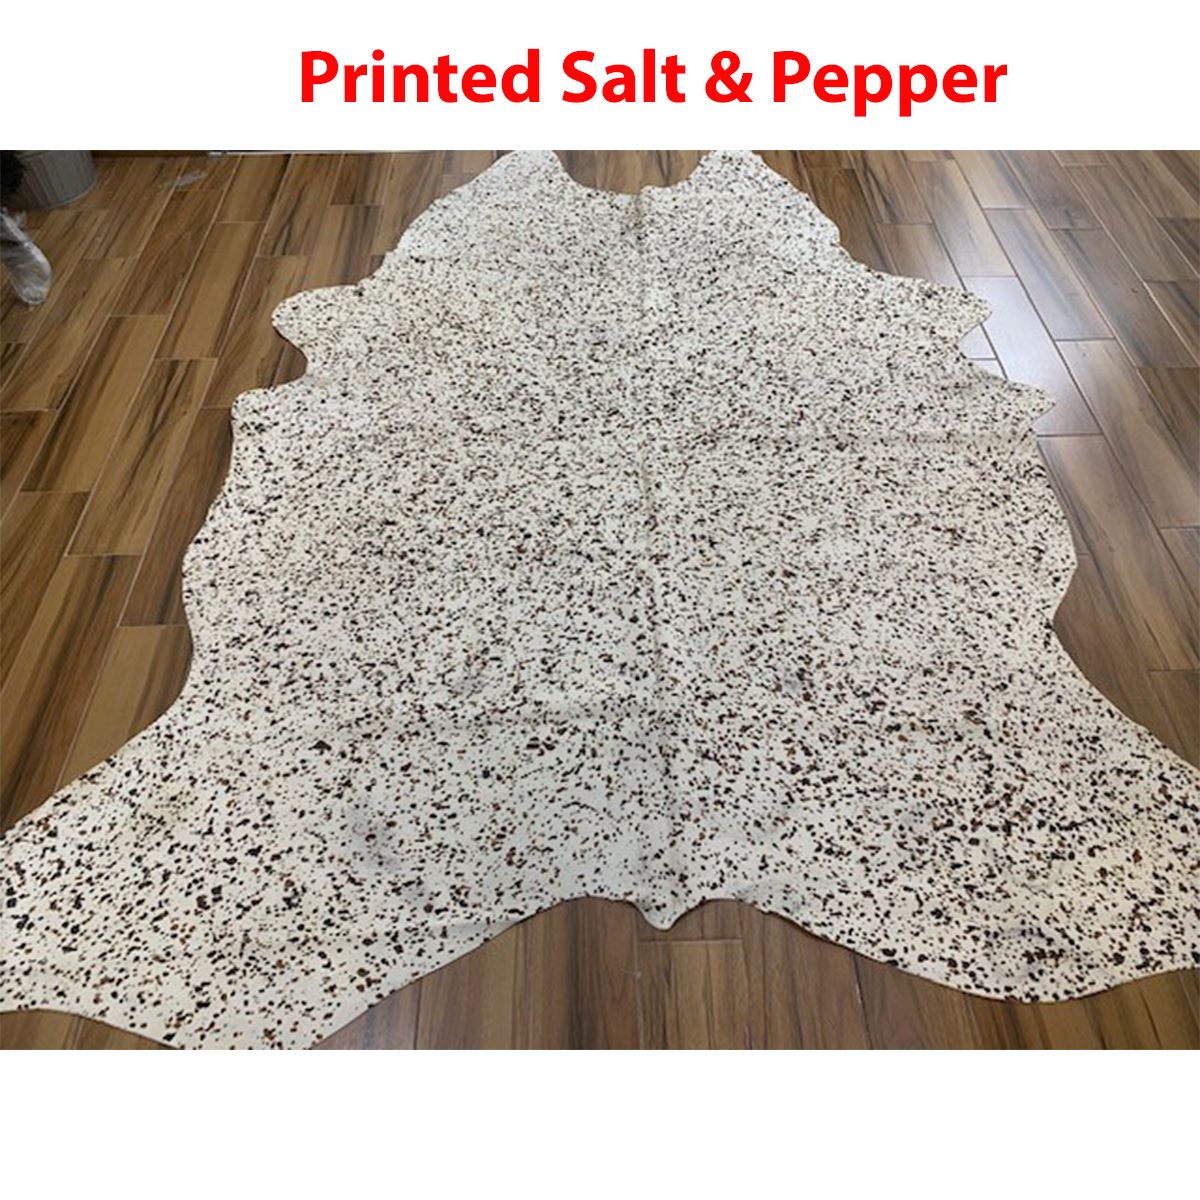 Printed Salt & Pepper